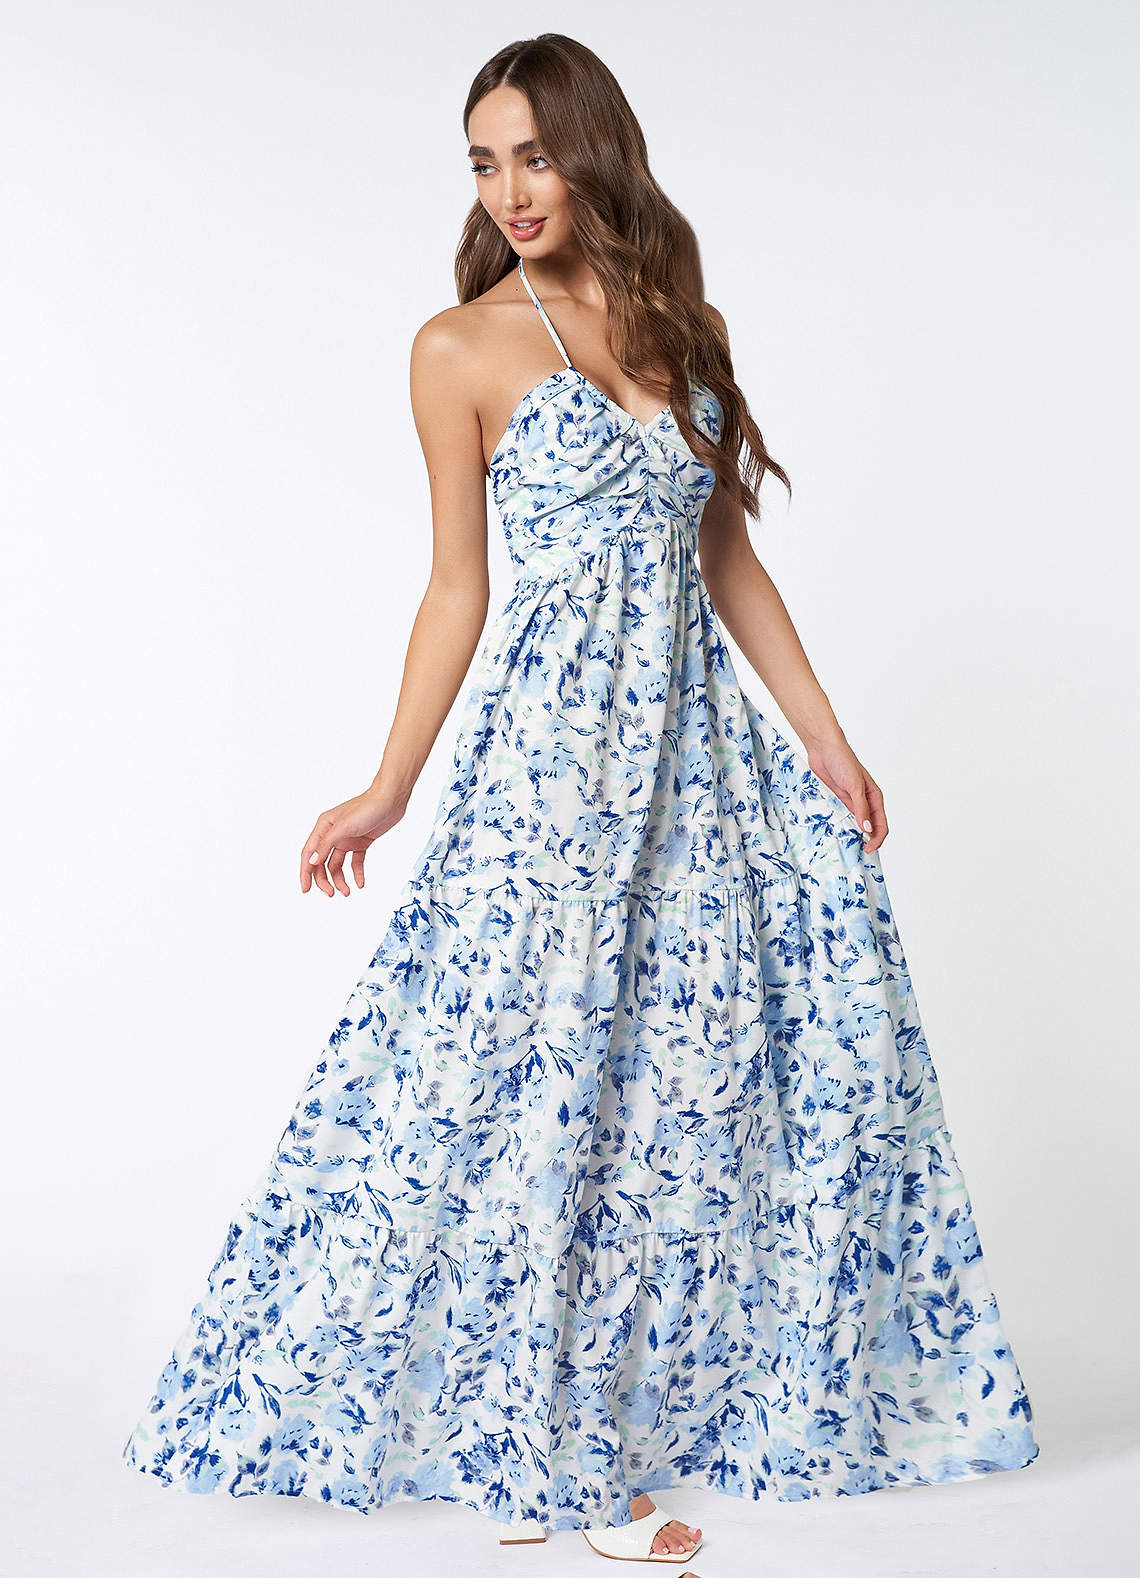 blue floral dresses